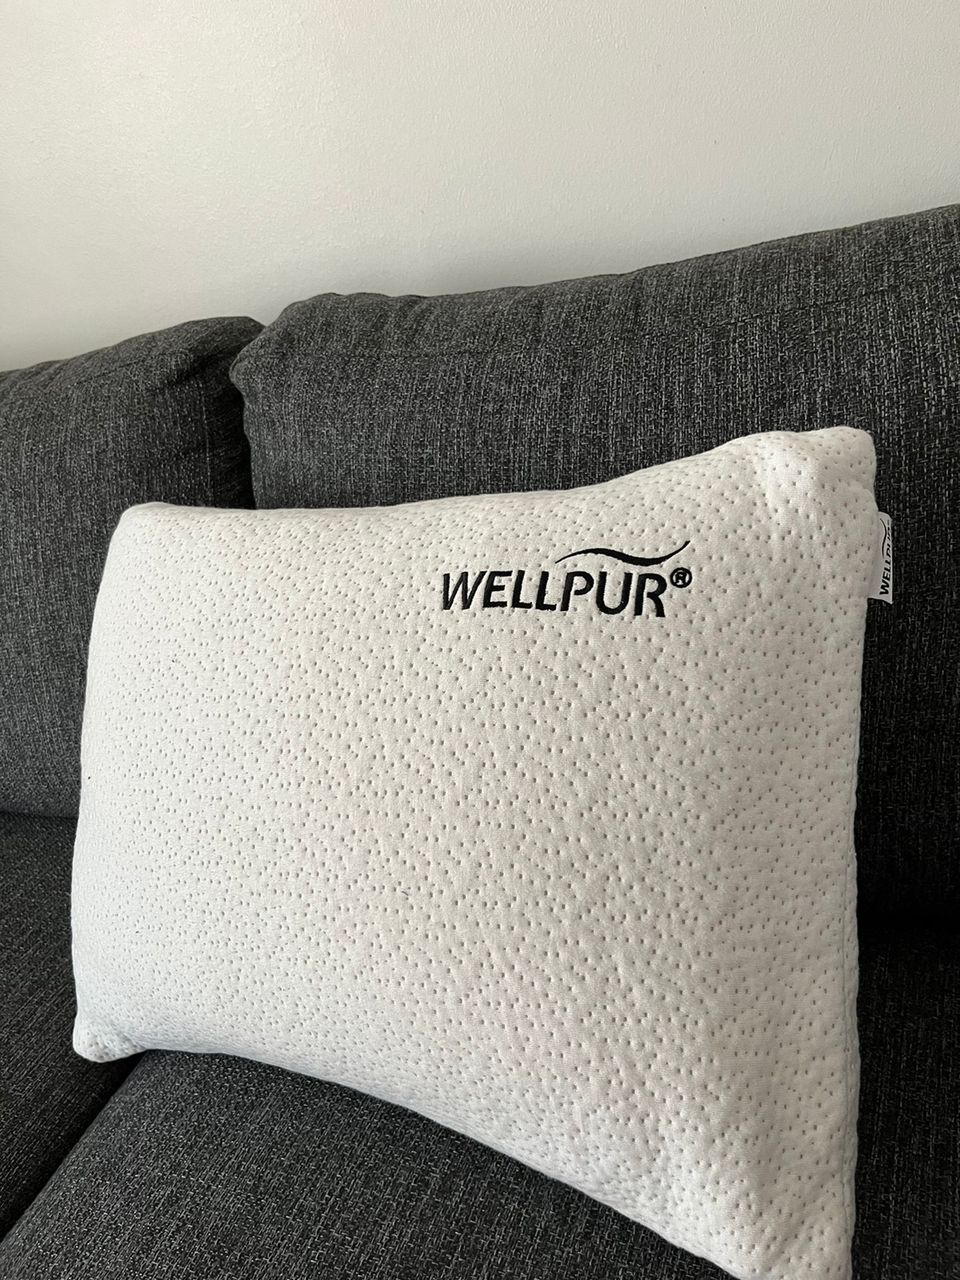 Wellpur